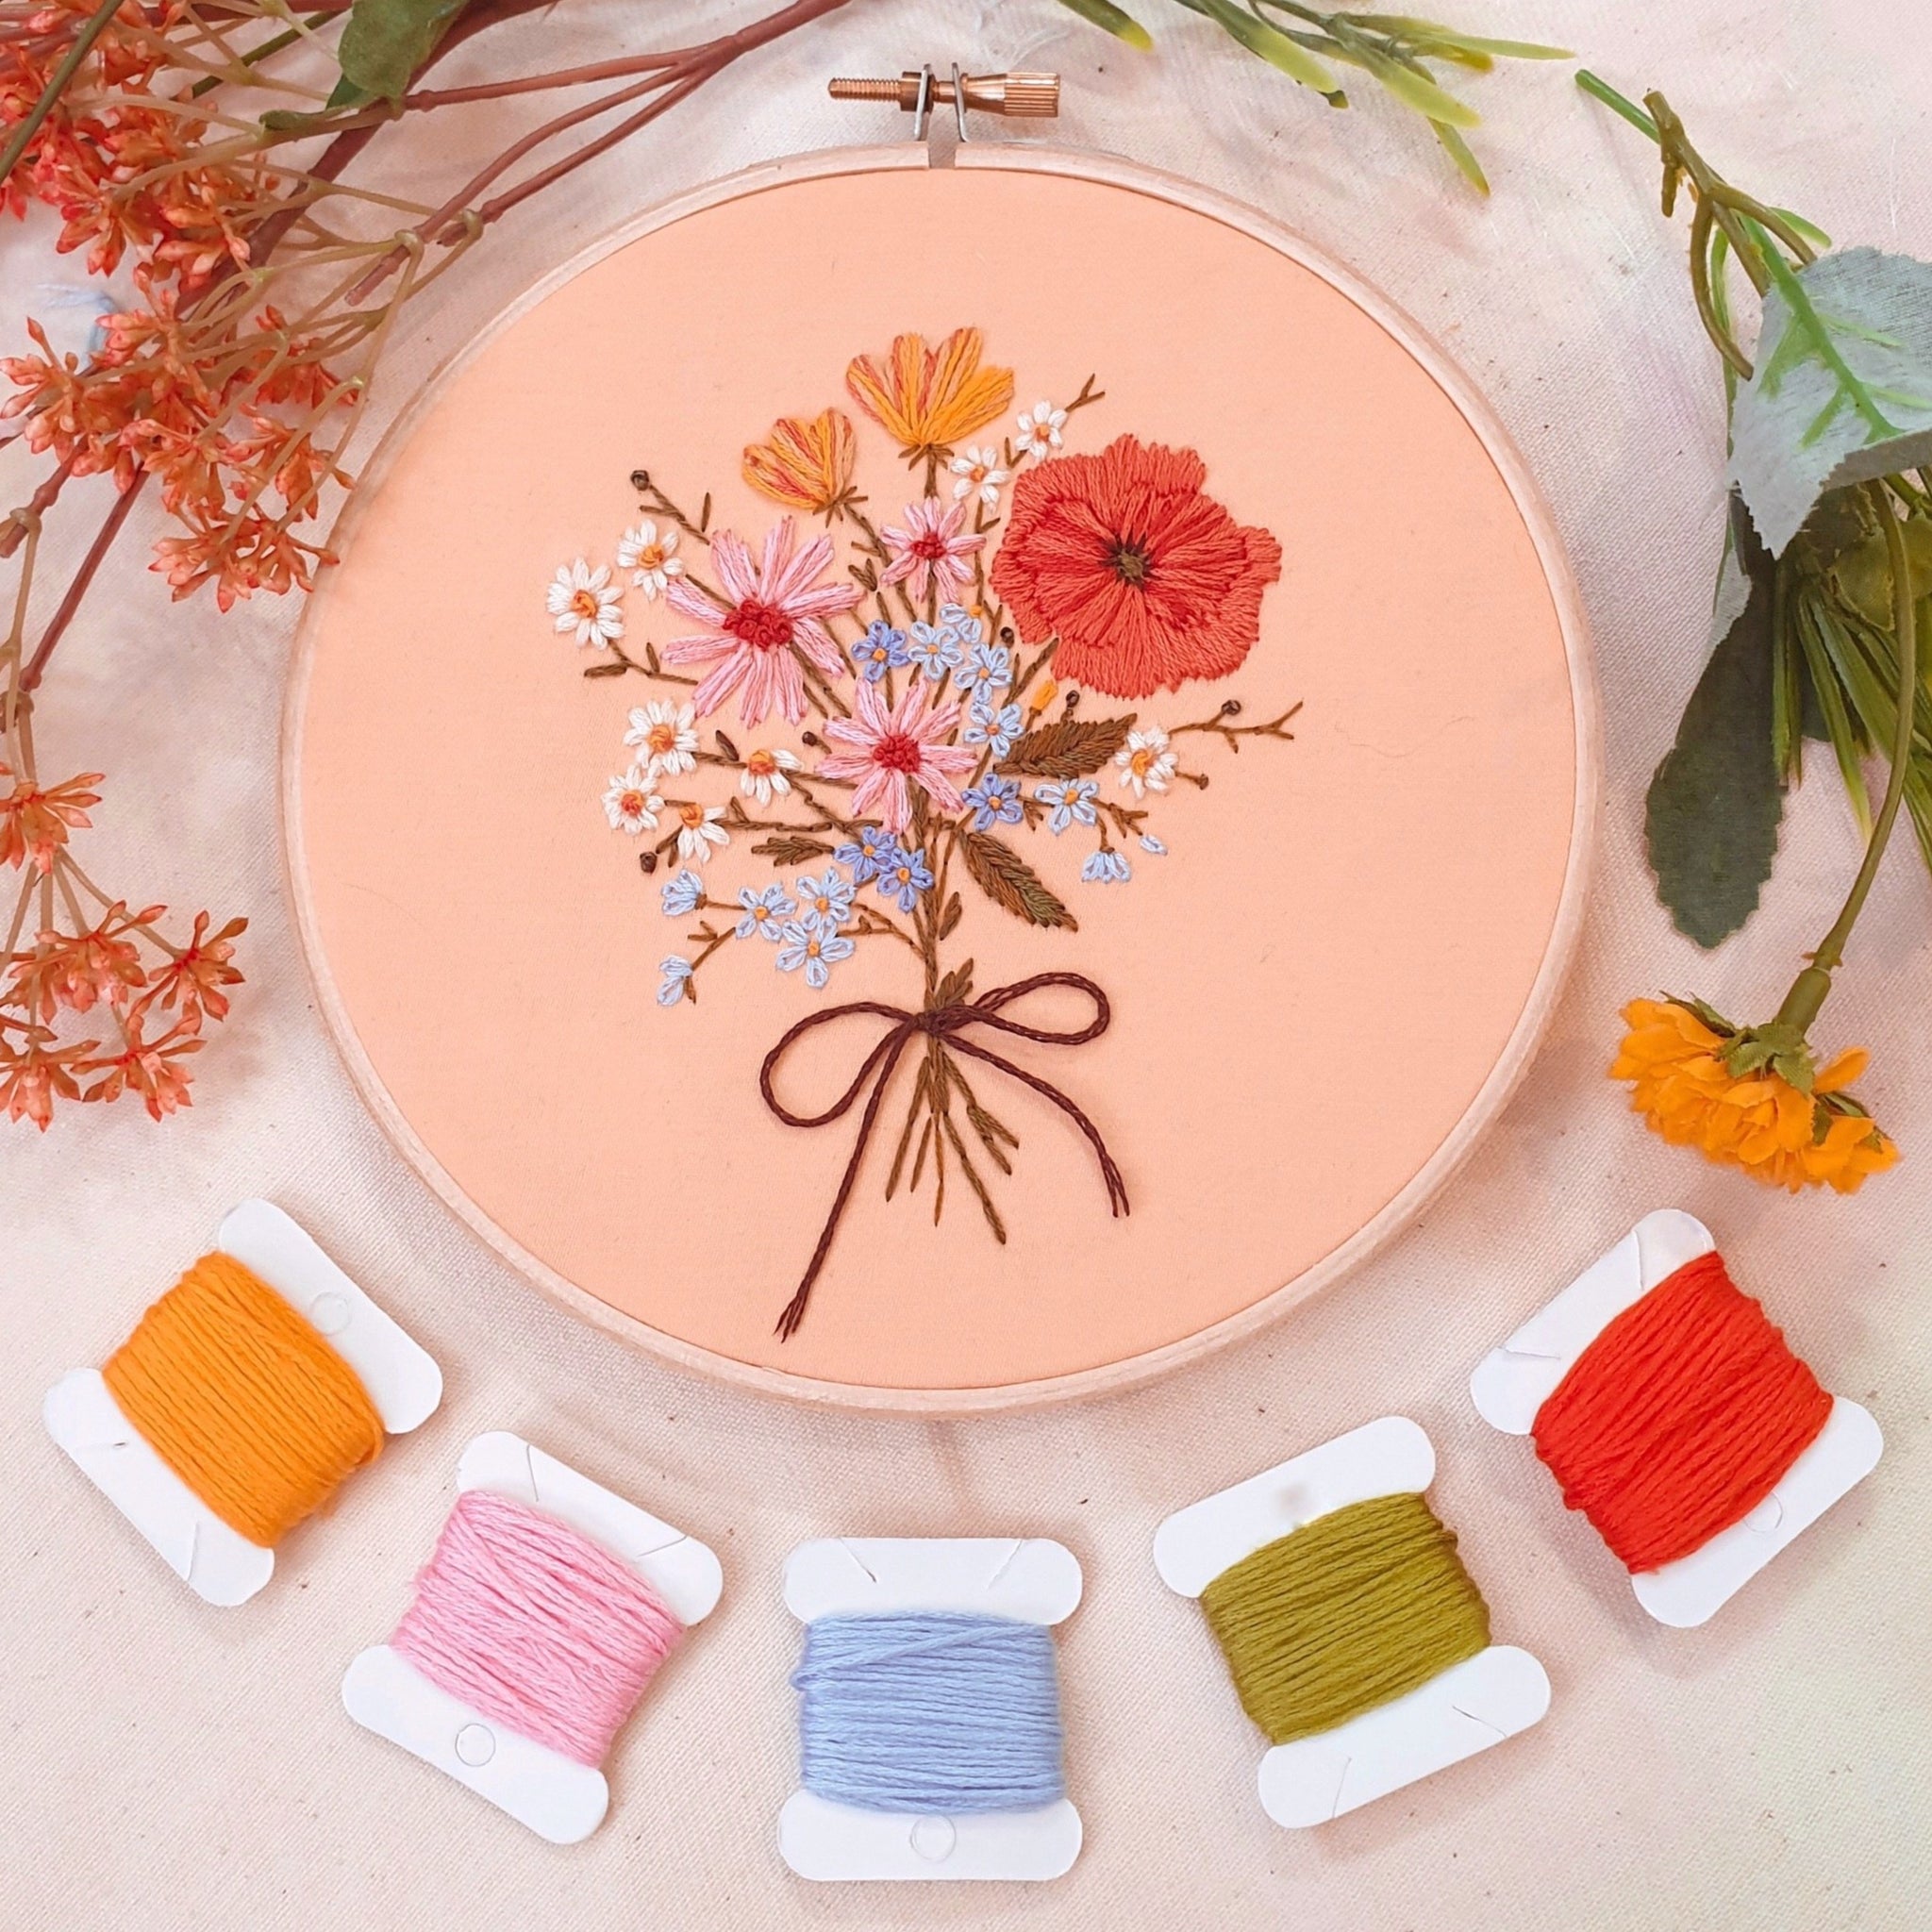 Make flower embroidery kit